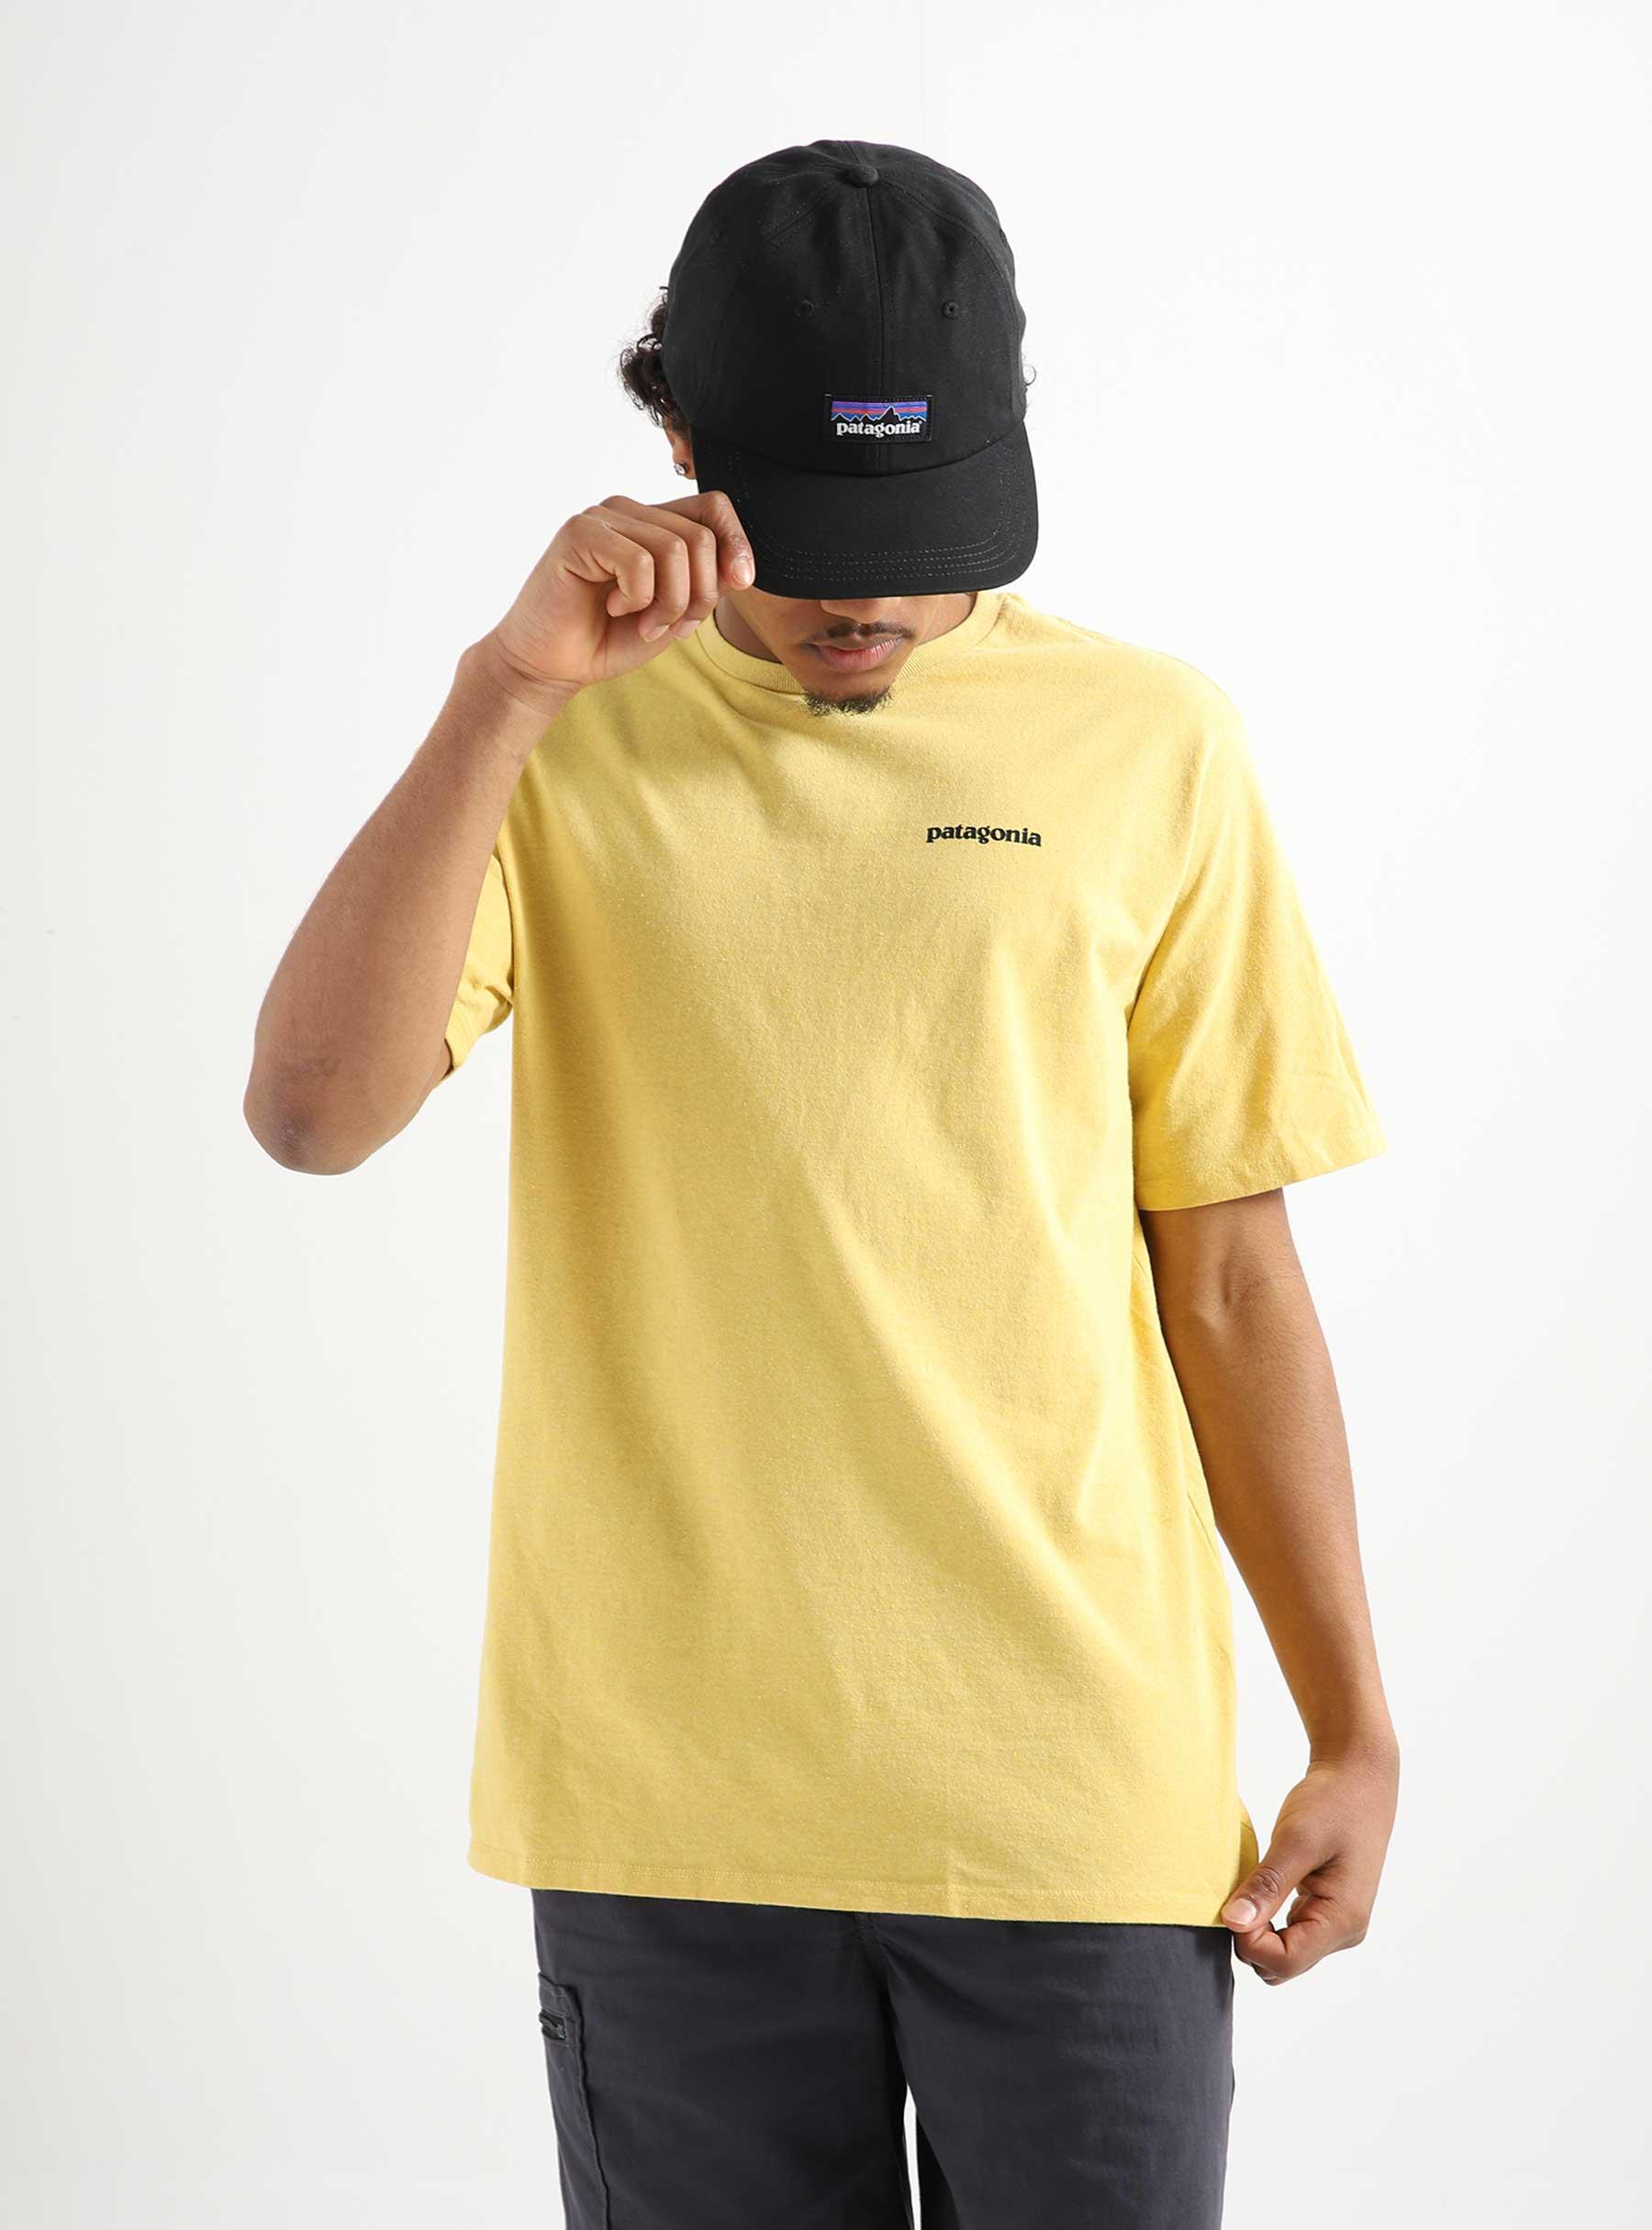 Bevatten Microbe Mount Bank M's P-6 Logo Responsibili T-Shirt Surfboard Yellow - Freshcotton